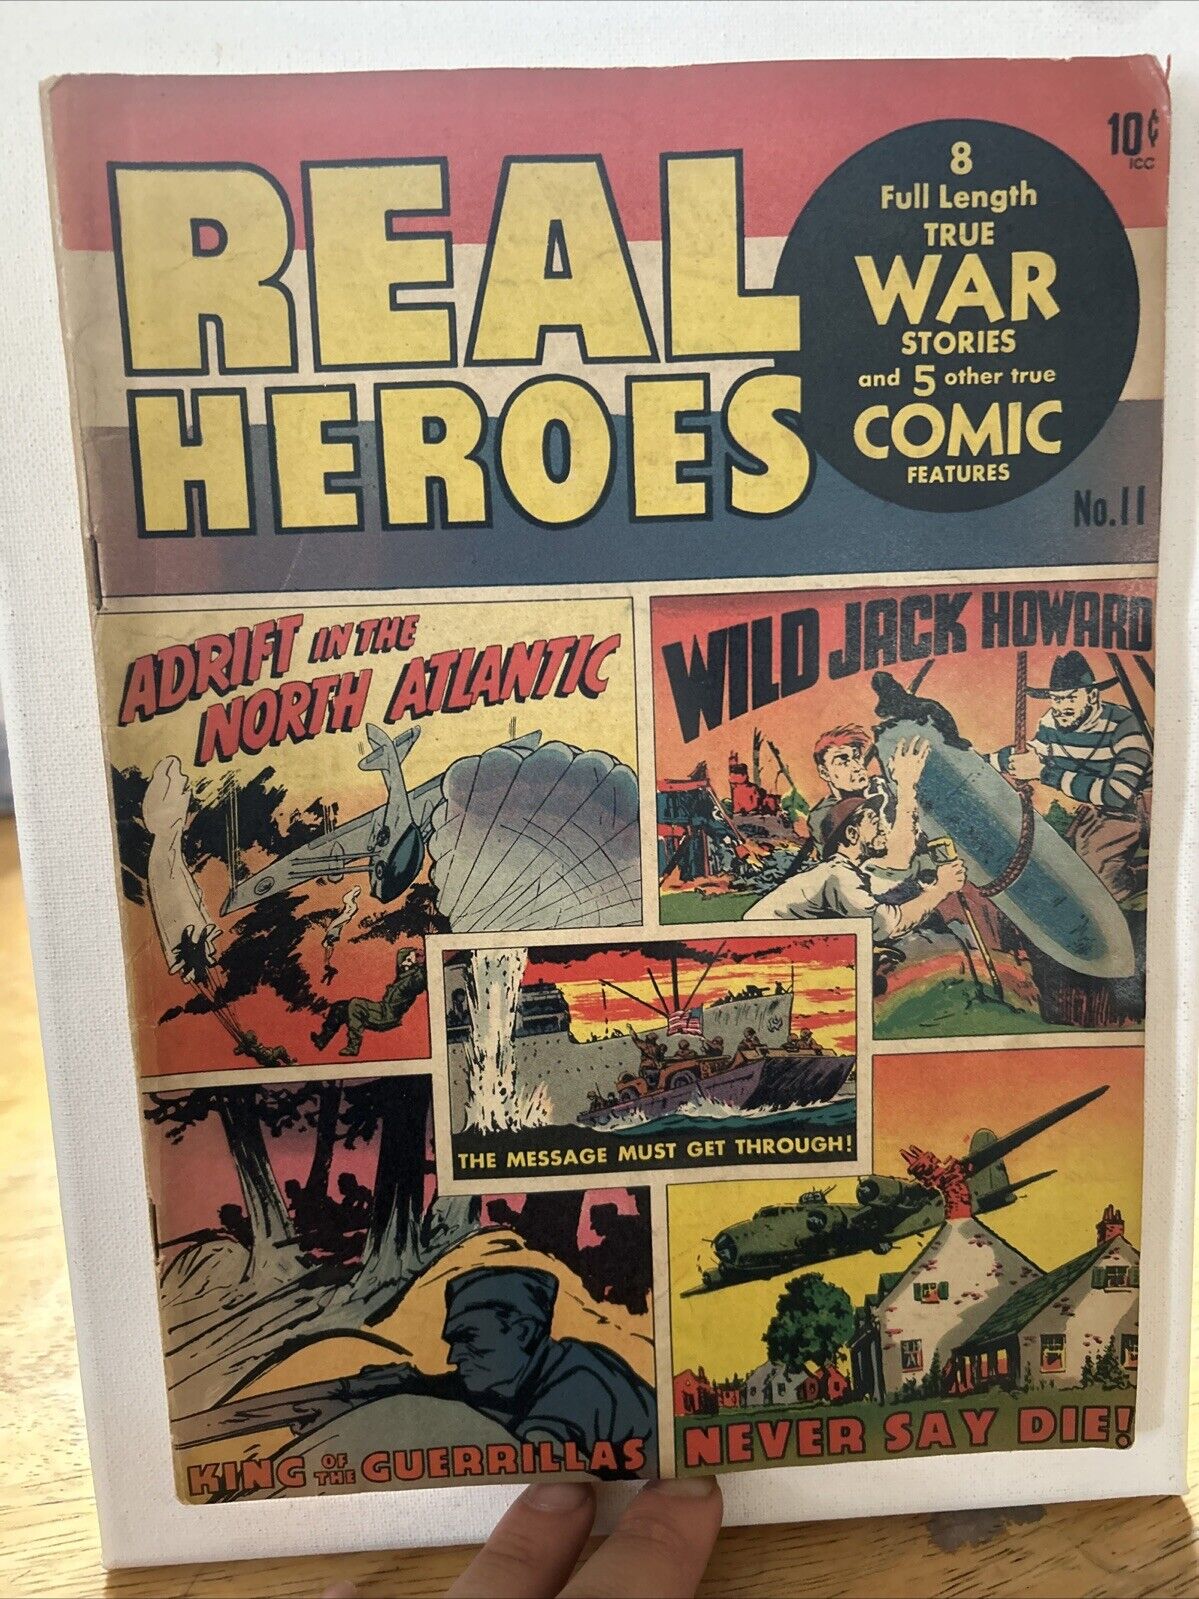 REAL HEROES #11 - Autumn 1943 Comic Book - 8 True War Stories - 5 Comic Features